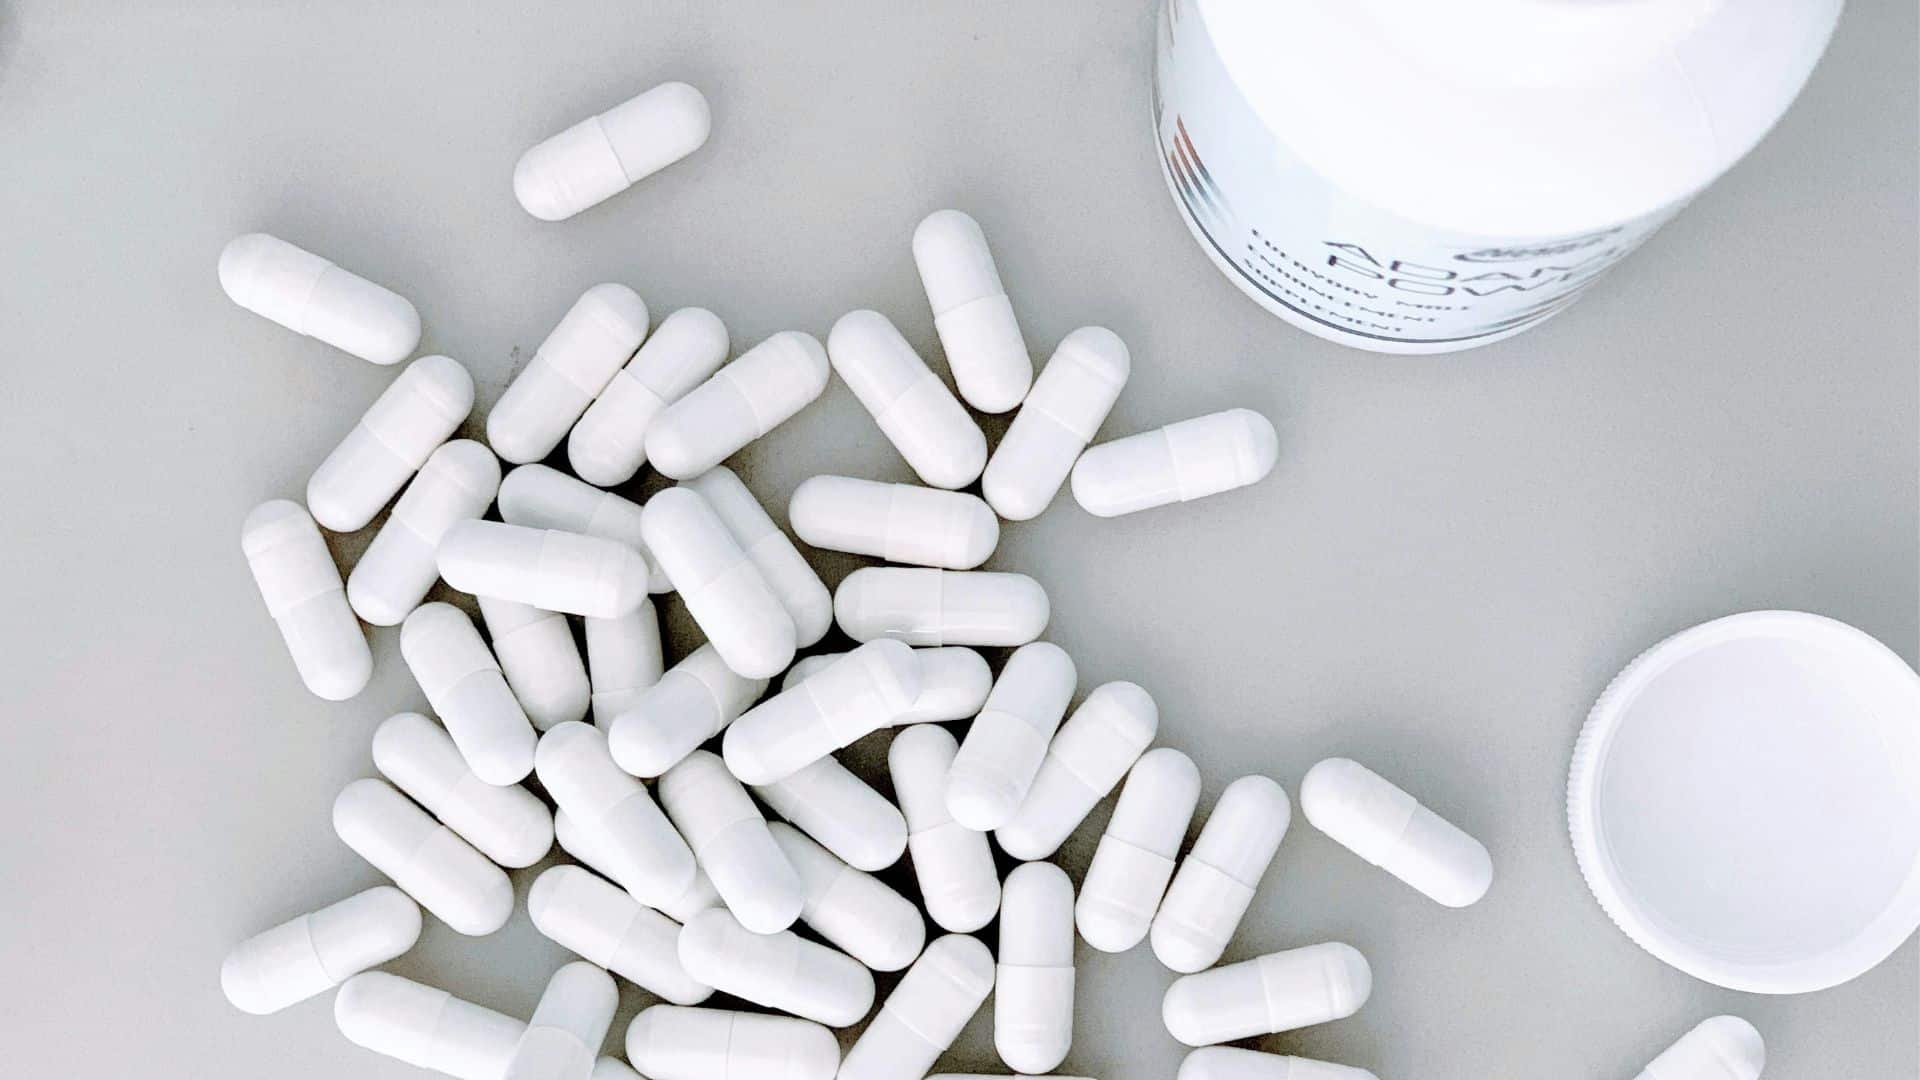 photo of white medication capsules